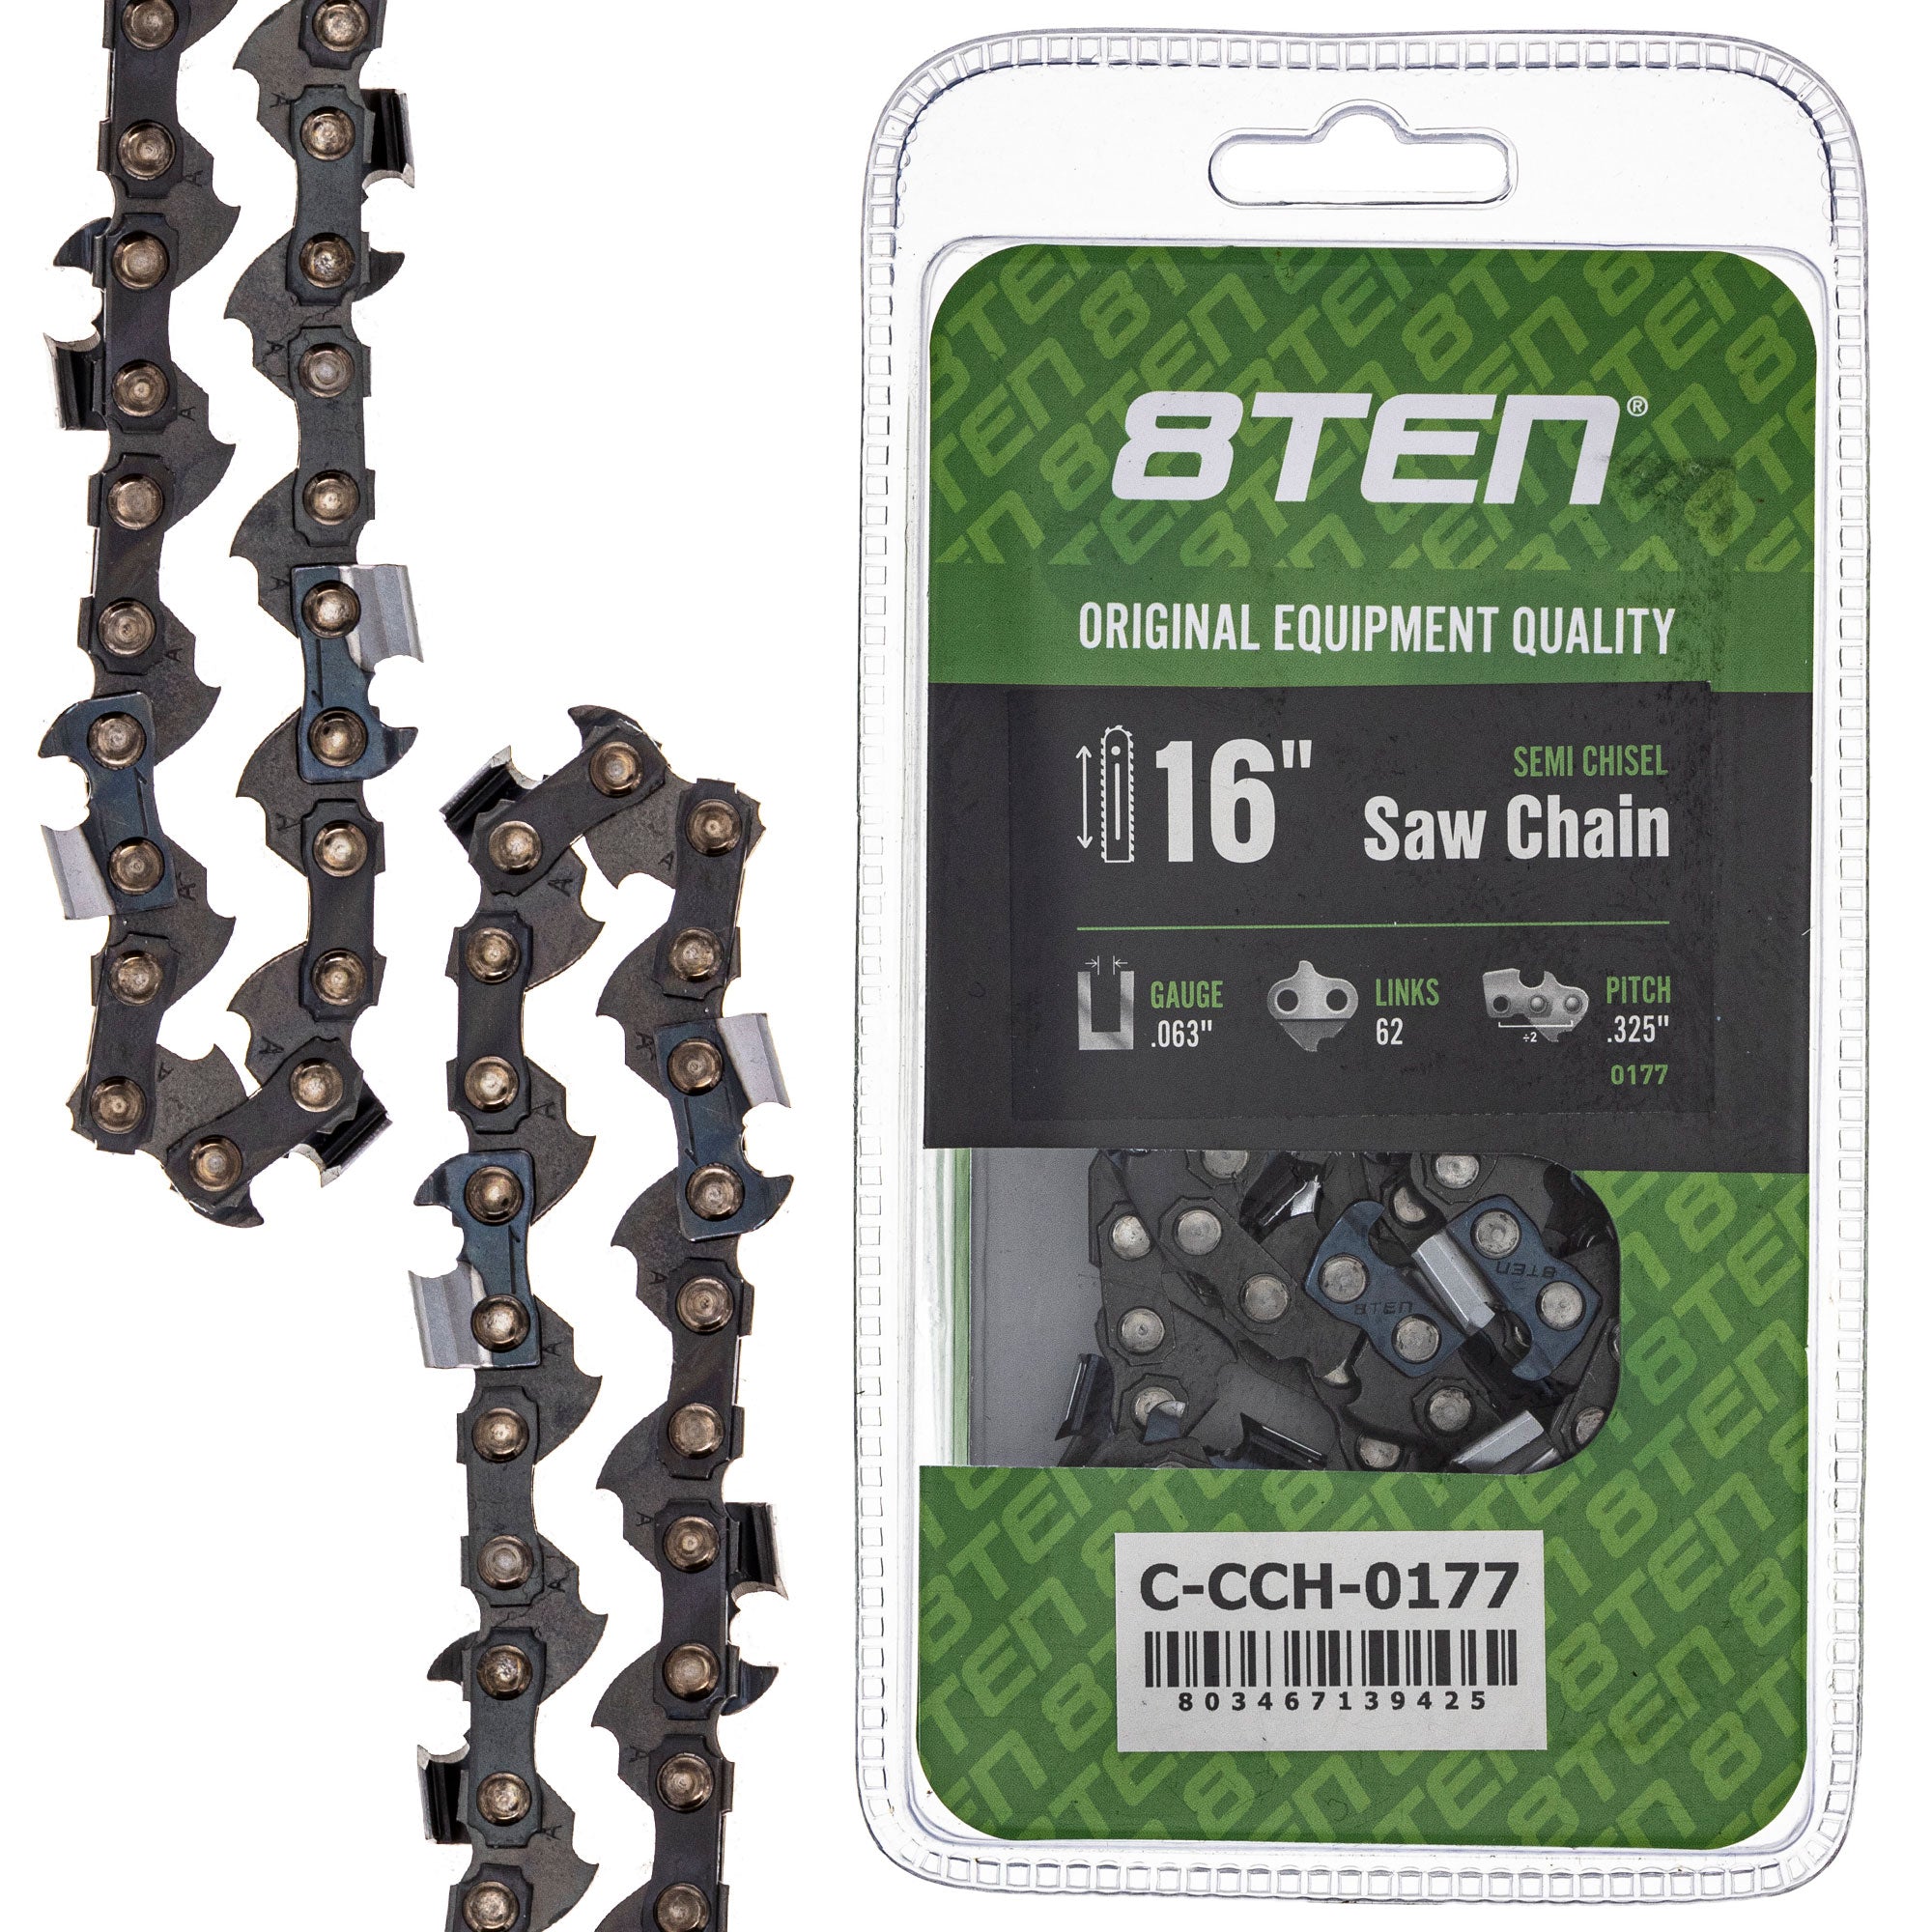 8TEN MK1010400 Guide Bar & Chain for MS 25 021